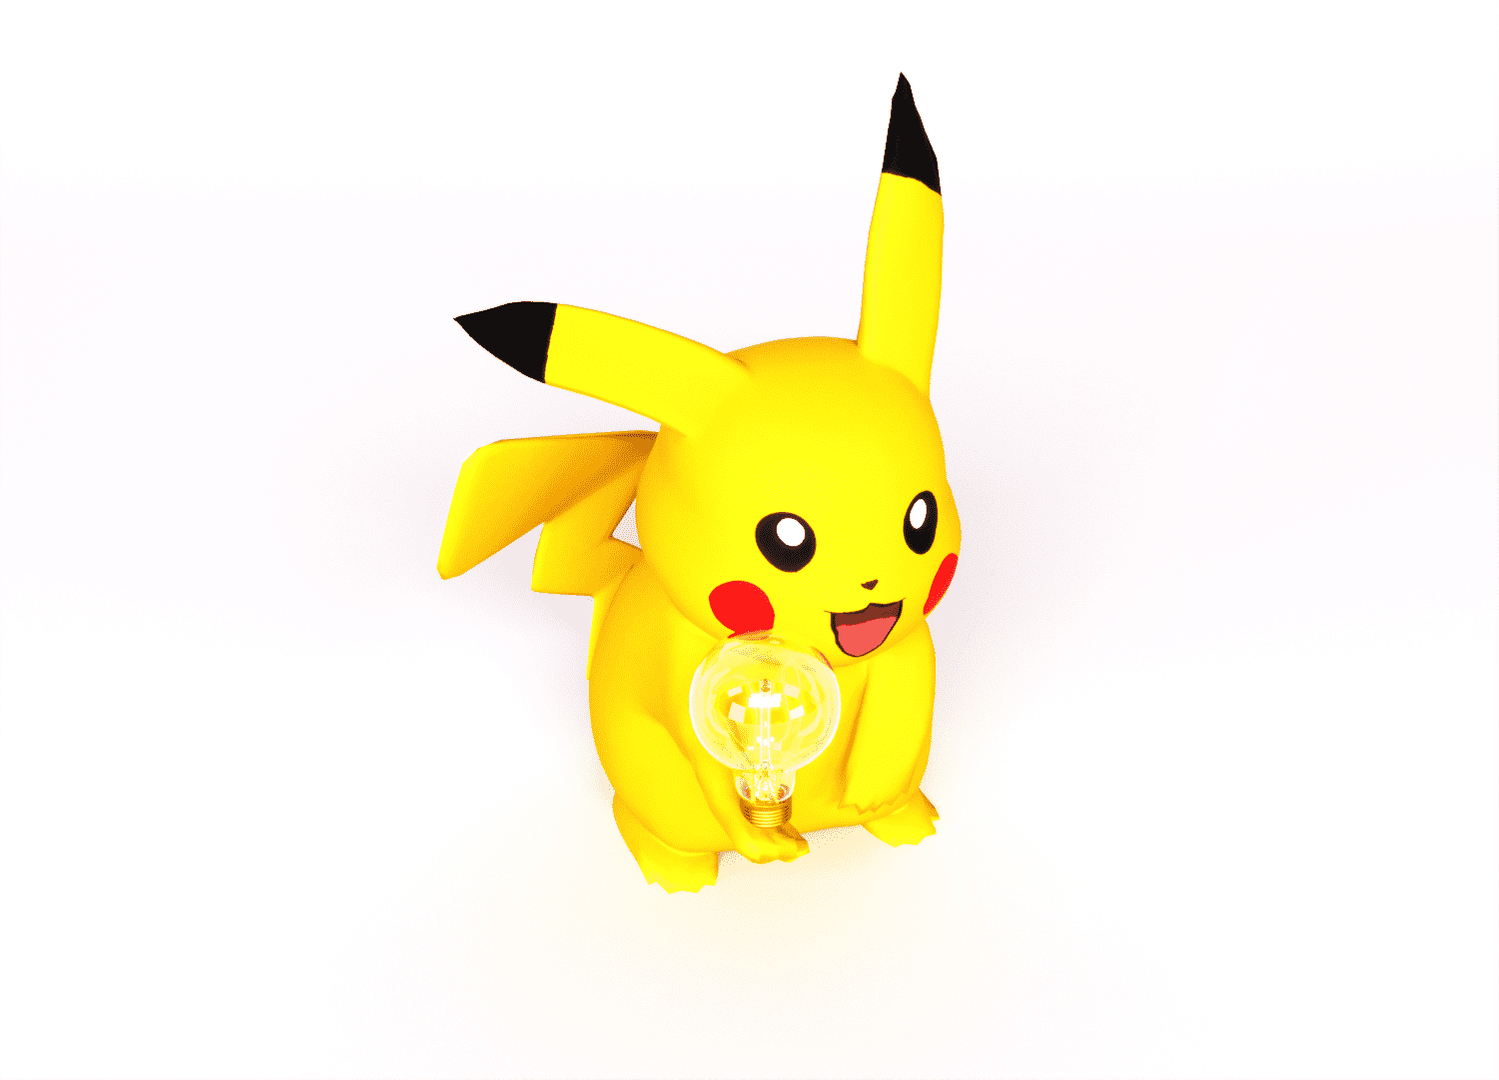 5,025 Pikachu Images, Stock Photos, 3D objects, & Vectors